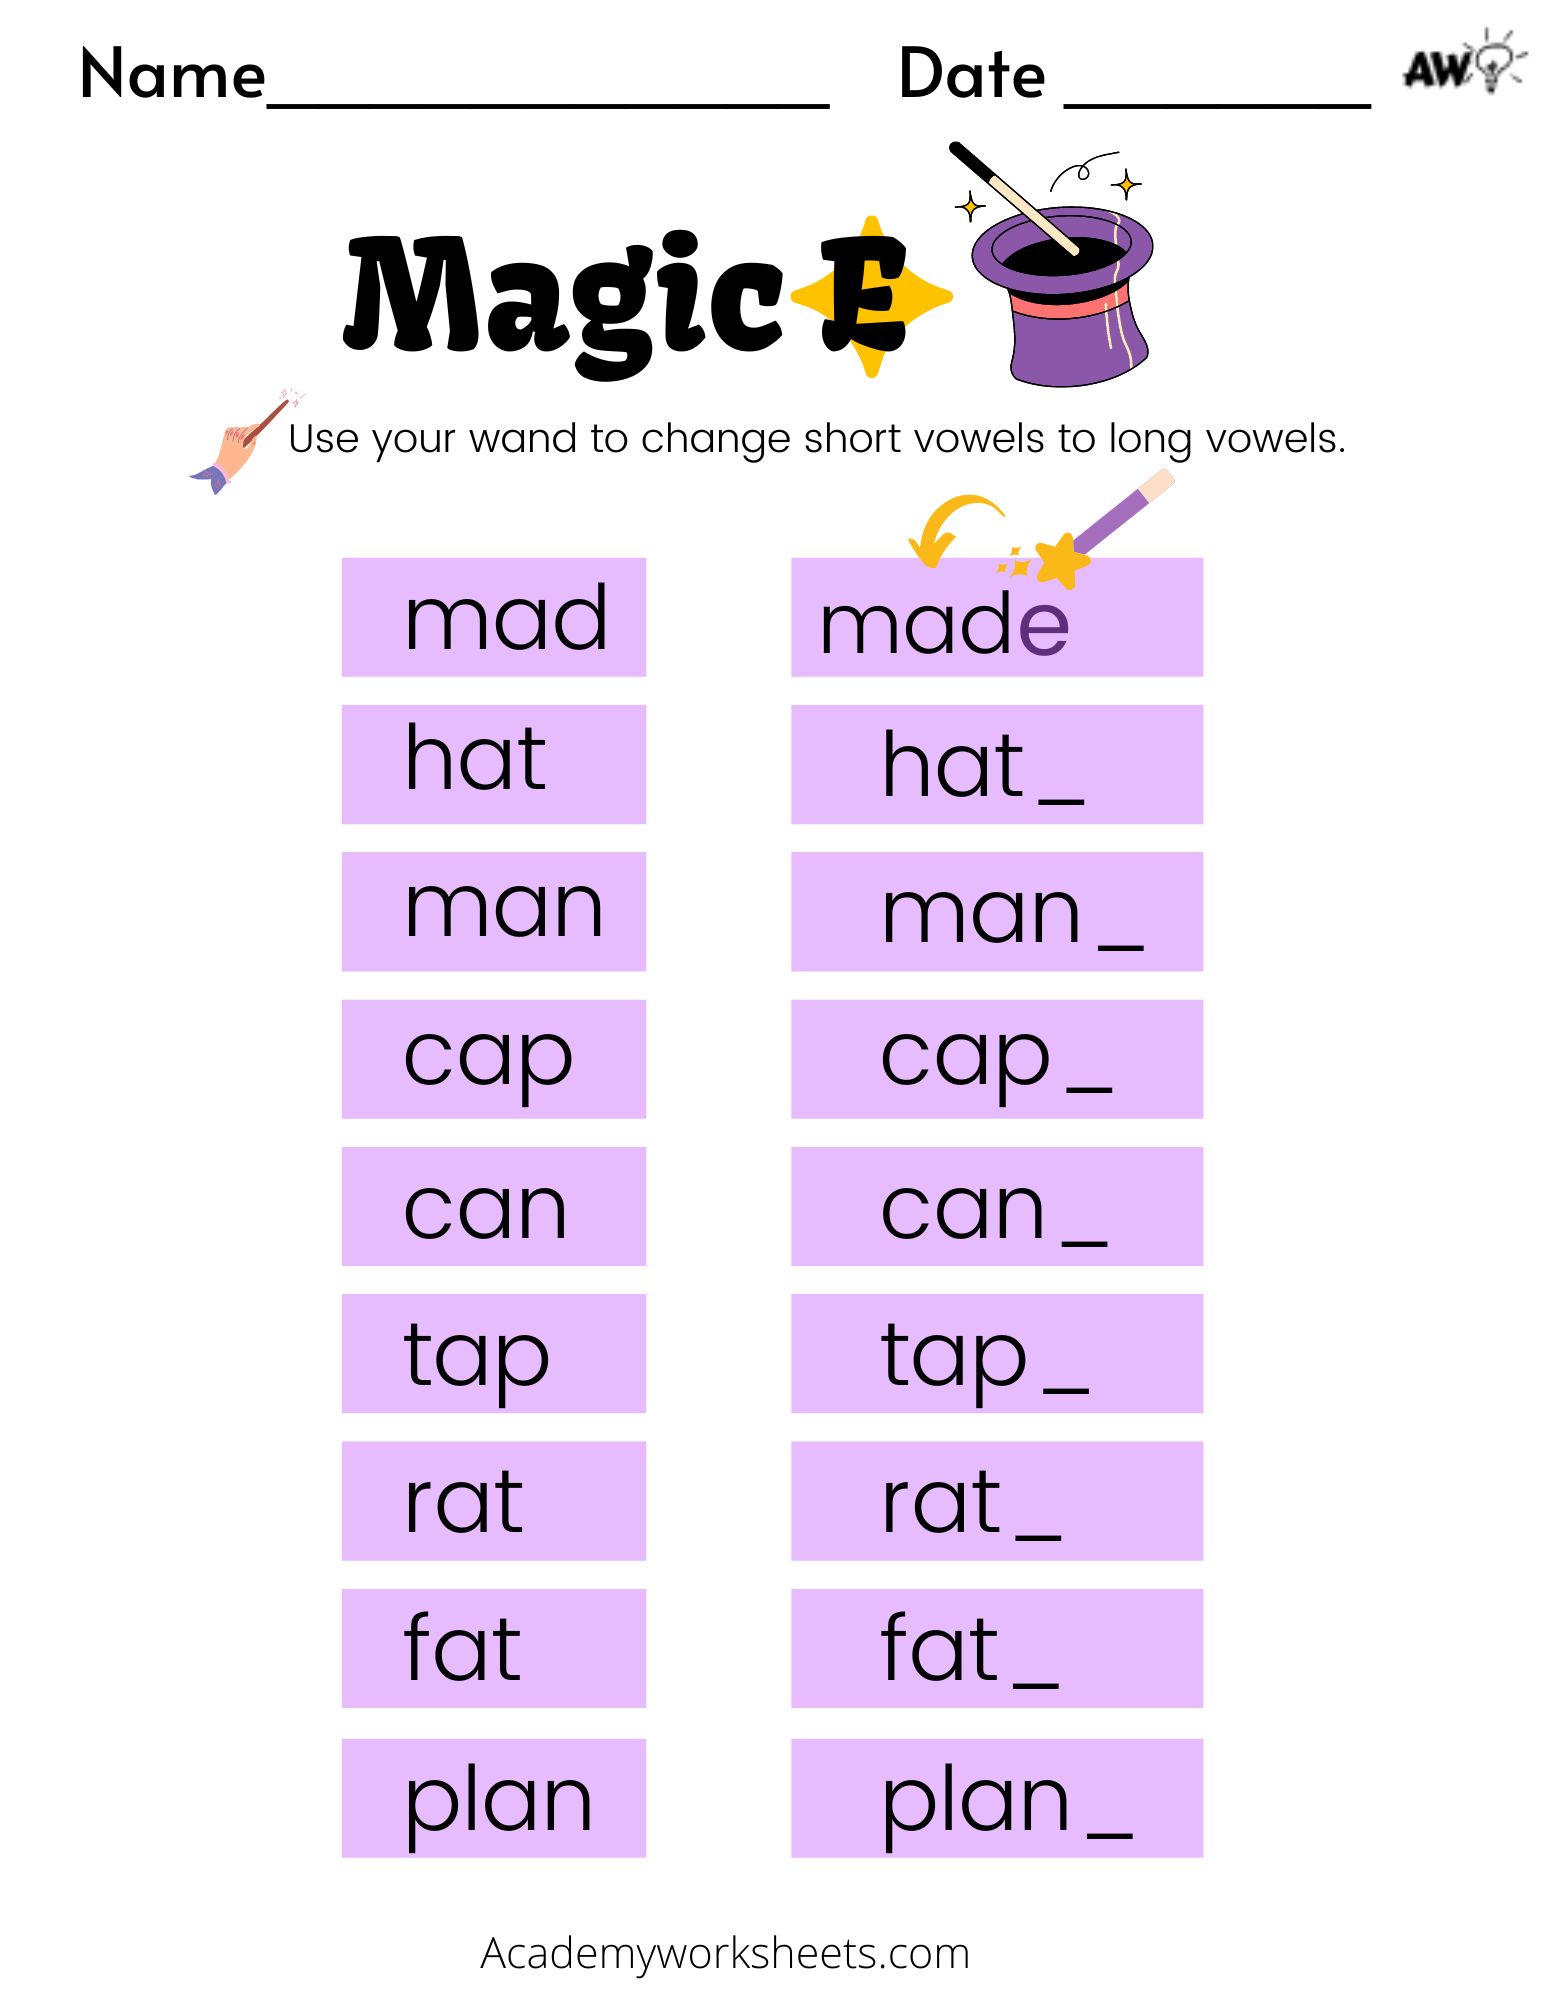 Magic 'e' a_e (long a sound) - Letters and Sounds by